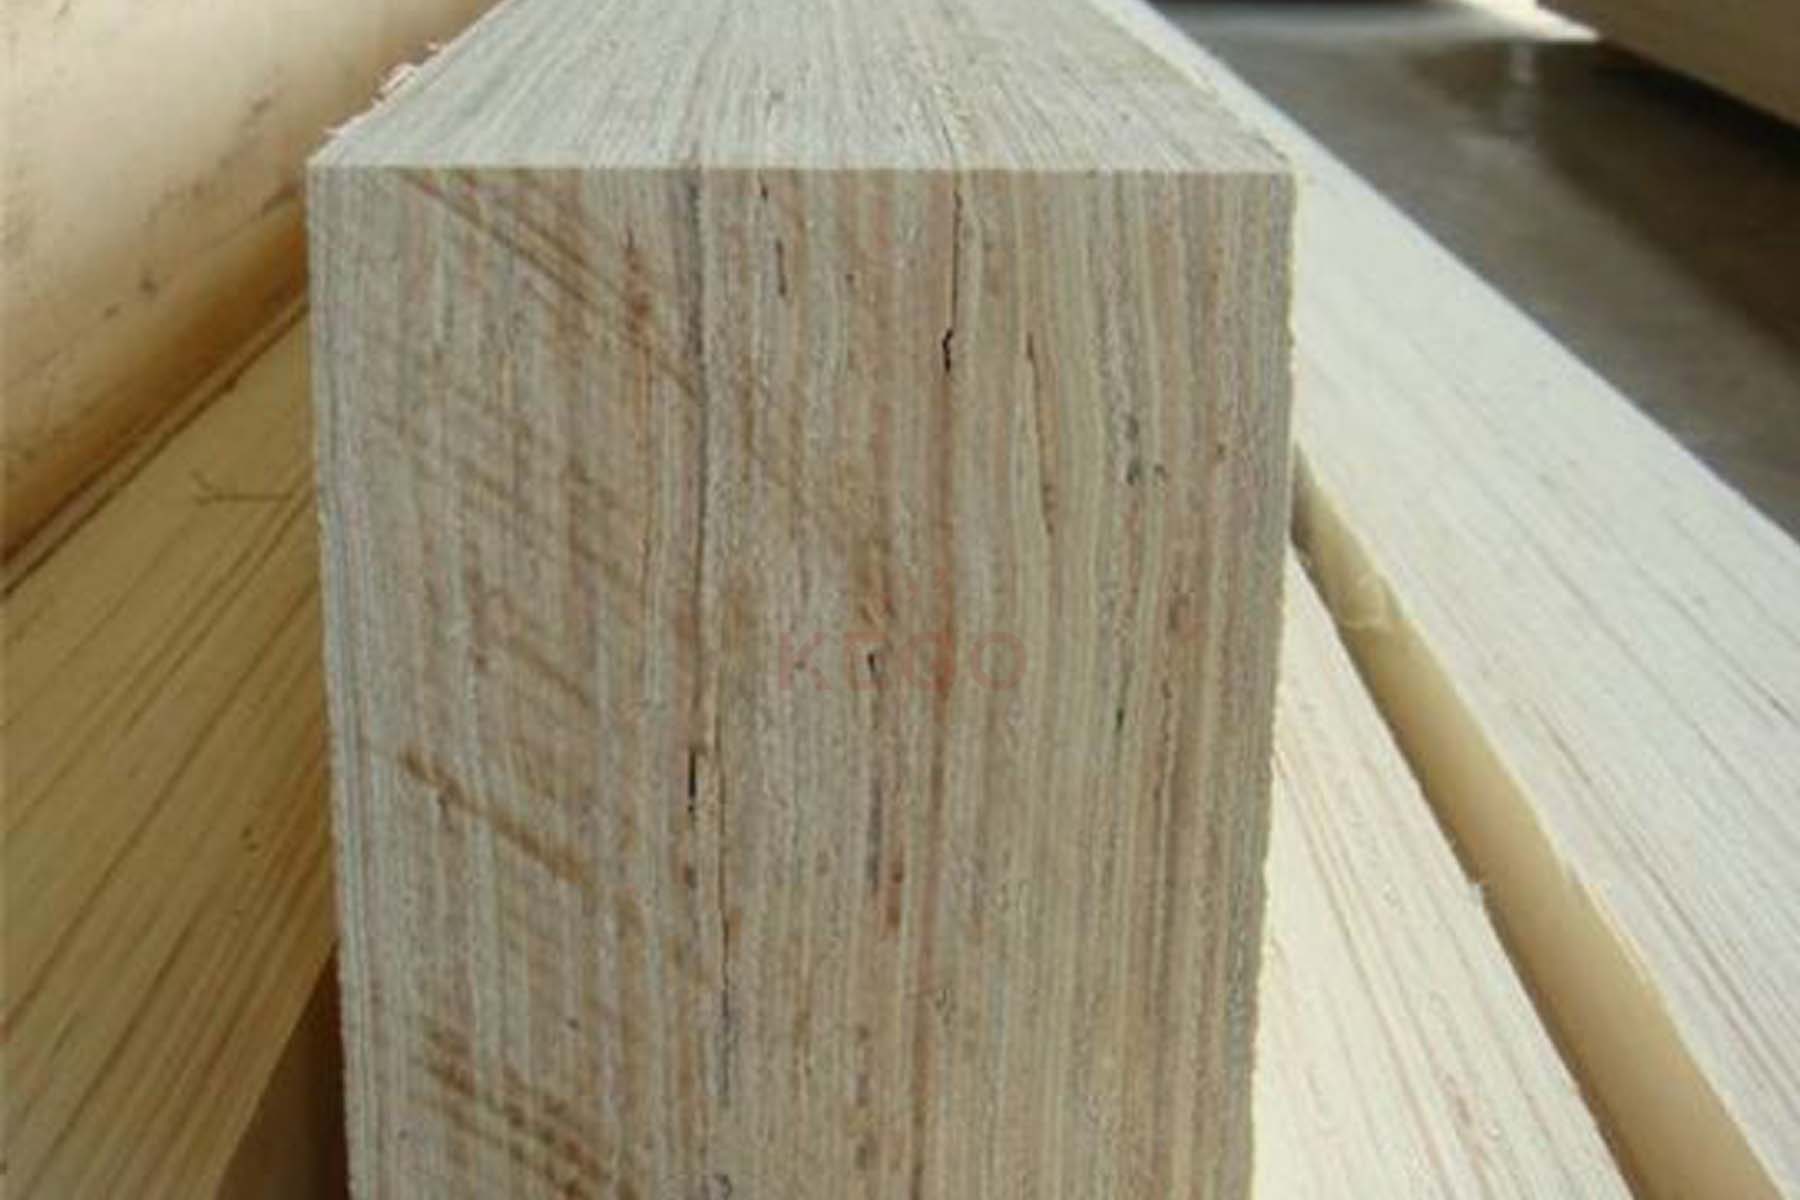 https://kego.com.vn/wp-content/uploads/2015/09/laminated-veneer-lumber-lvl-kego-19.jpg